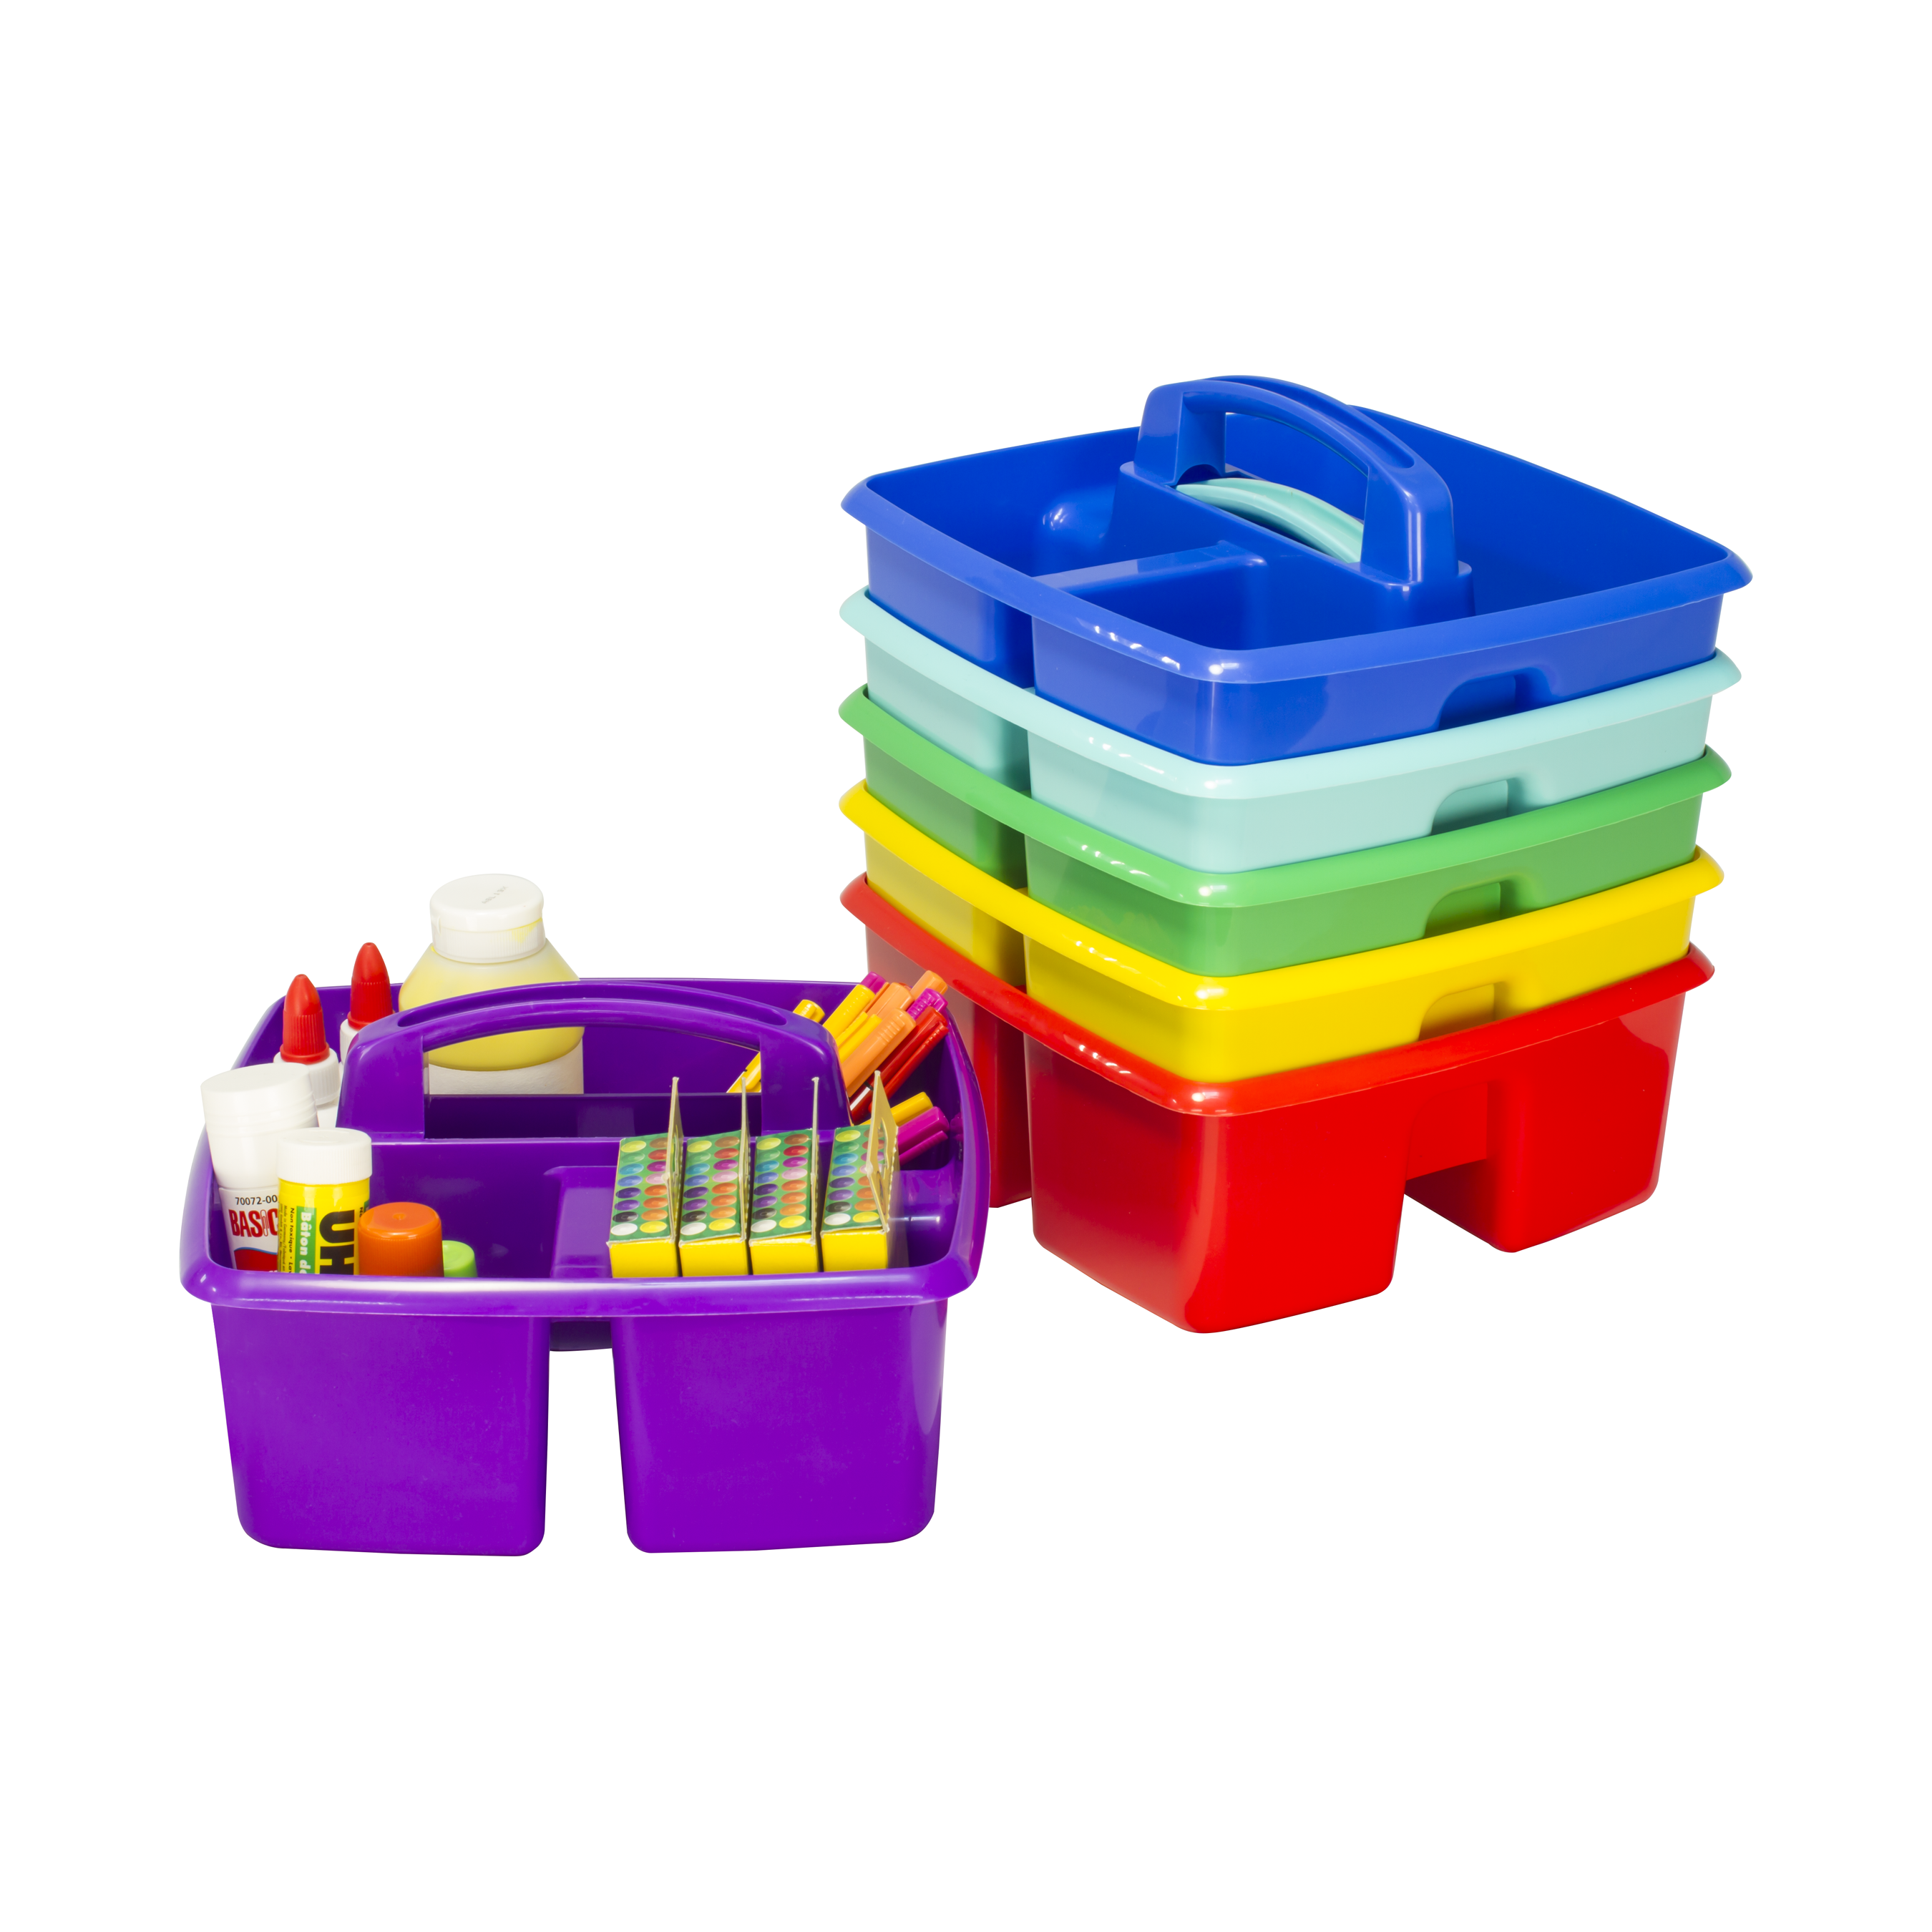 Storex Plastic Desktop Organizer Caddy with Handle, Craft and